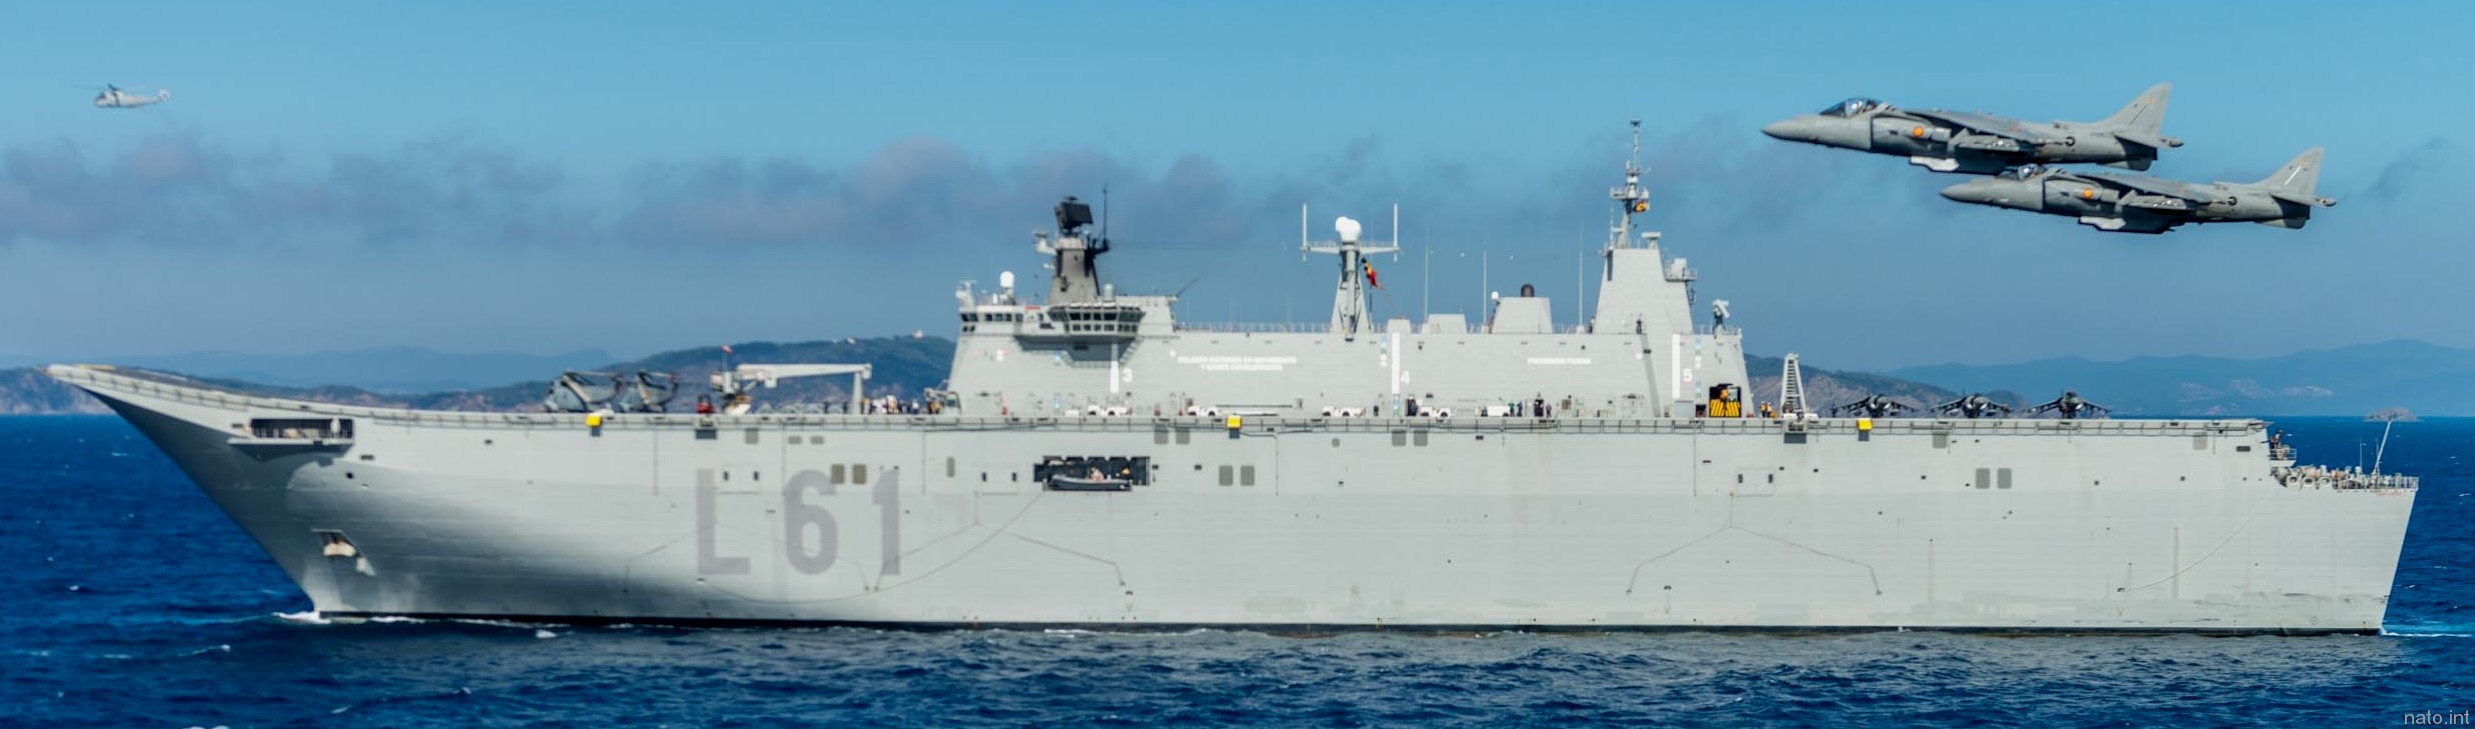 l-61 sps juan carlos i amphibious ship aircraft carrier spanish navy armada espanola 04